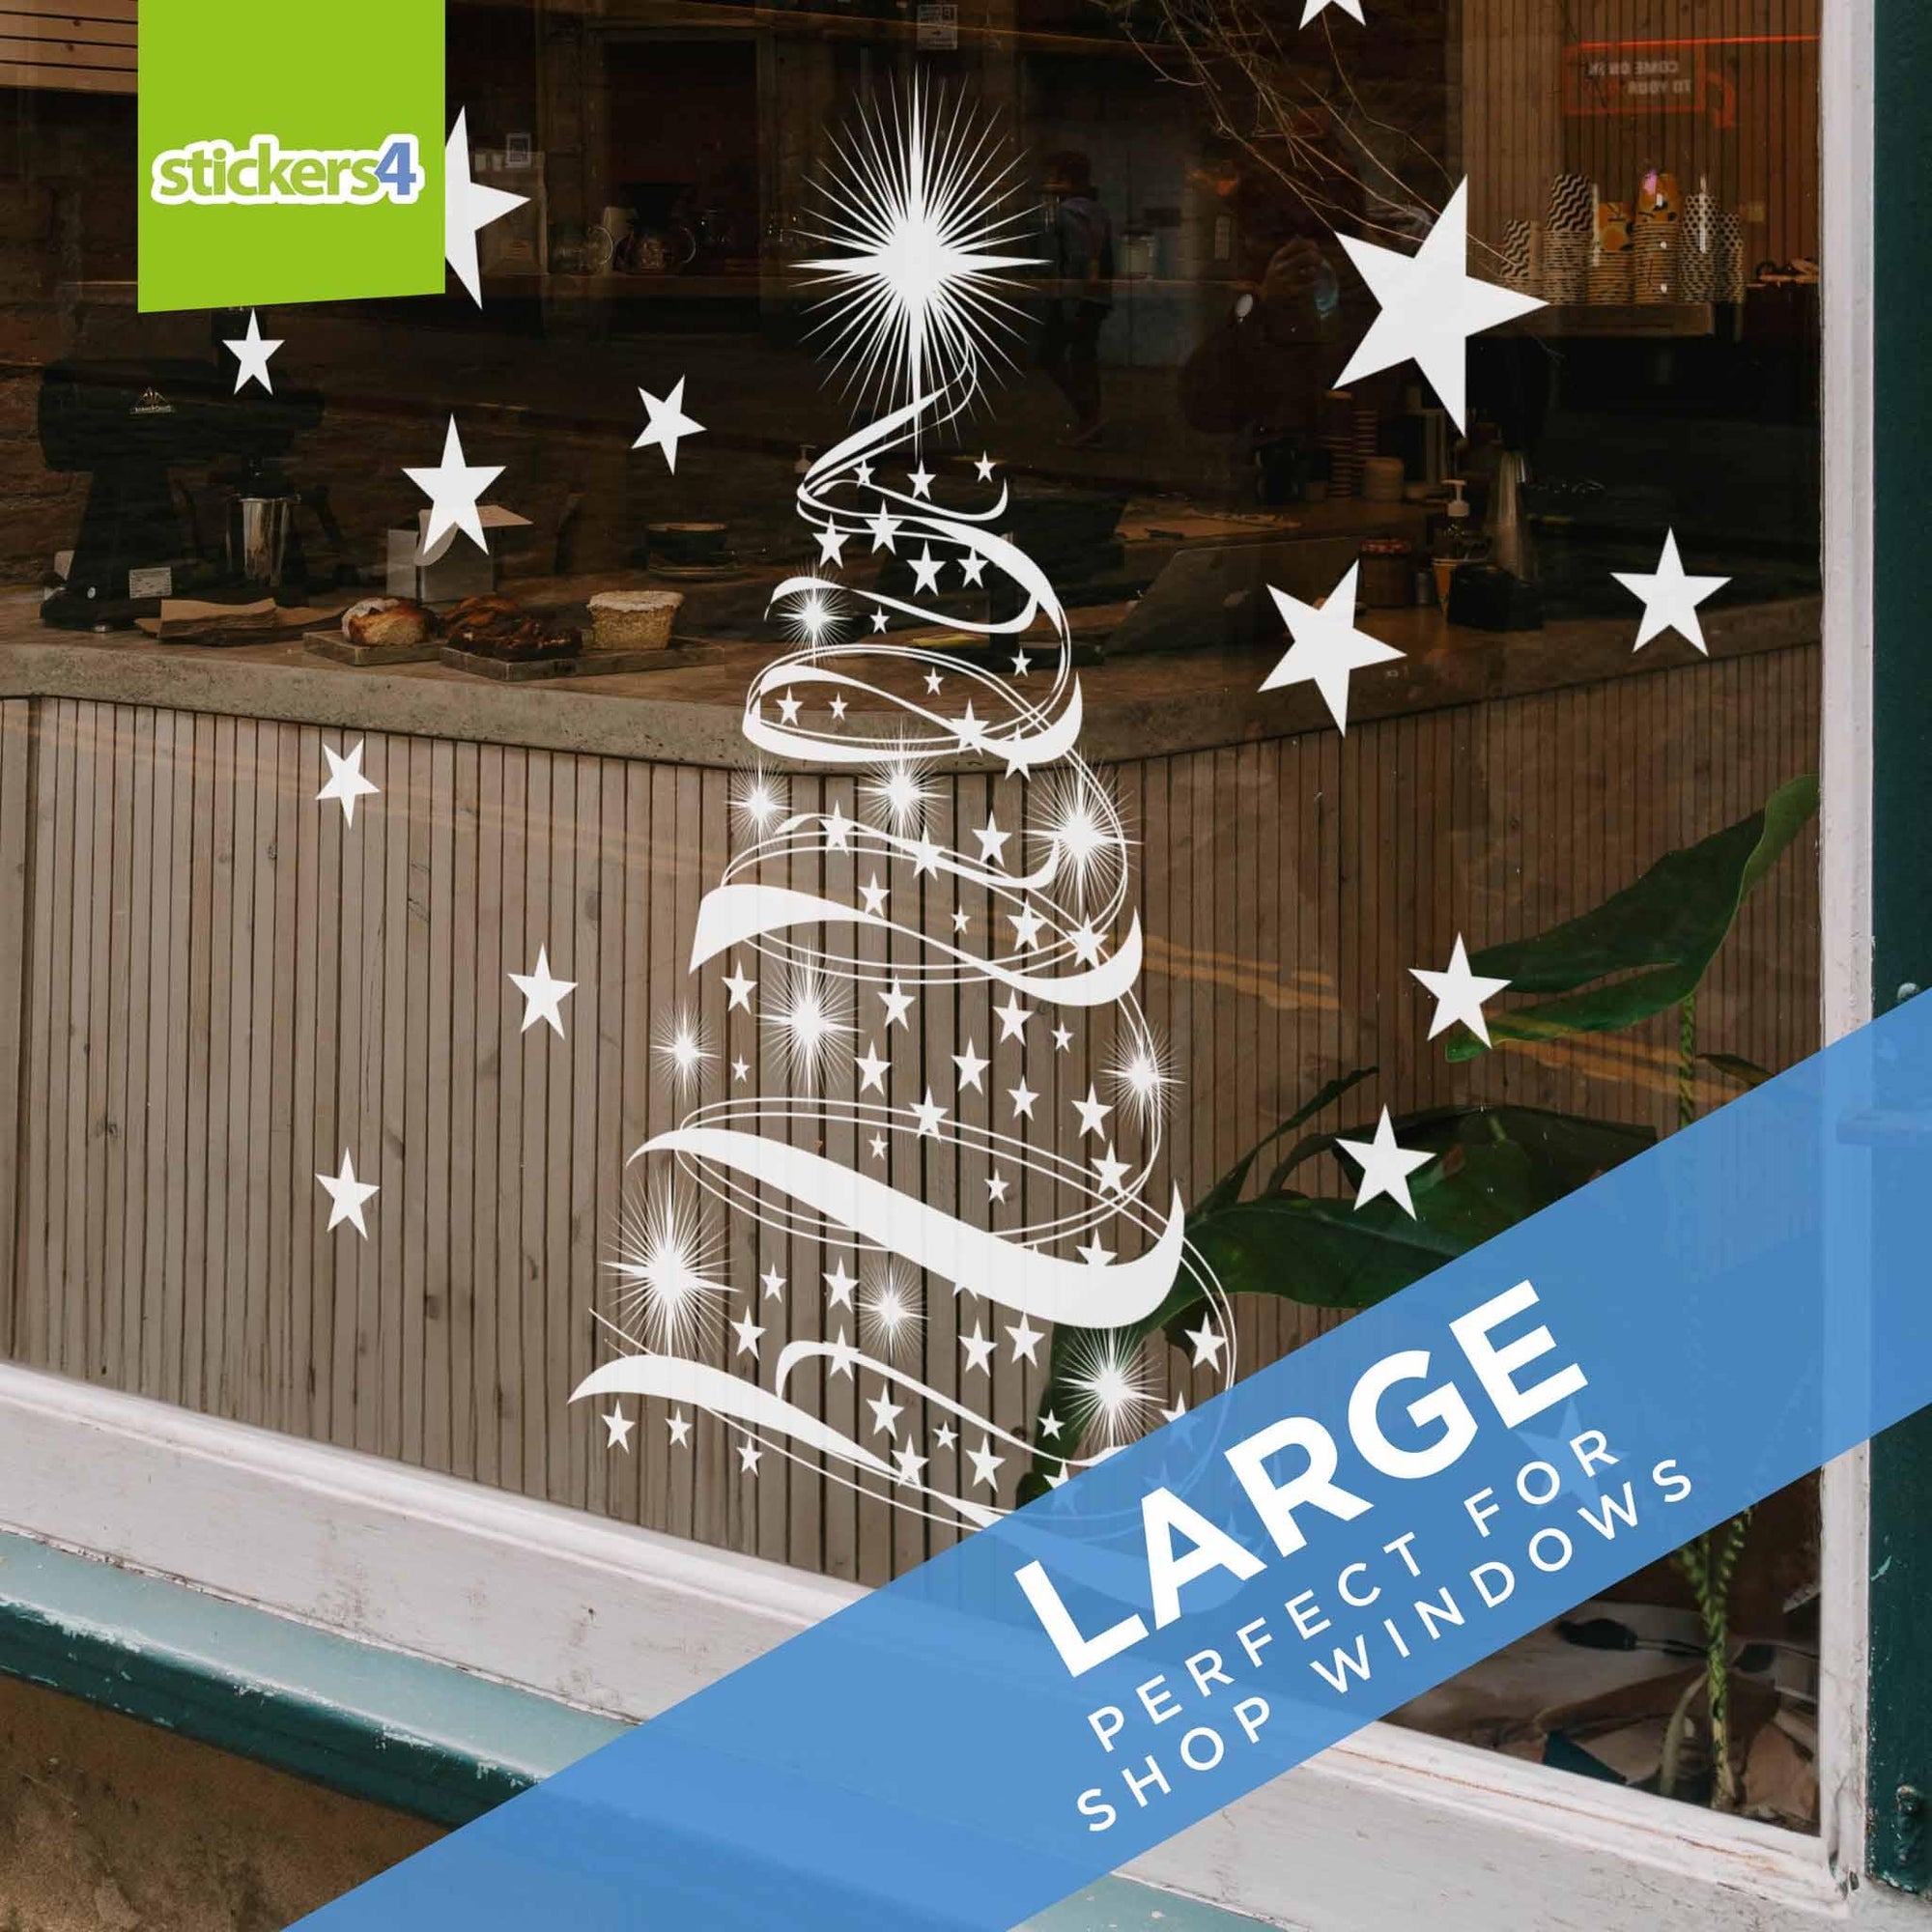 Christmas Star Tree Window Sticker - Now with added STARS! Christmas Window Display